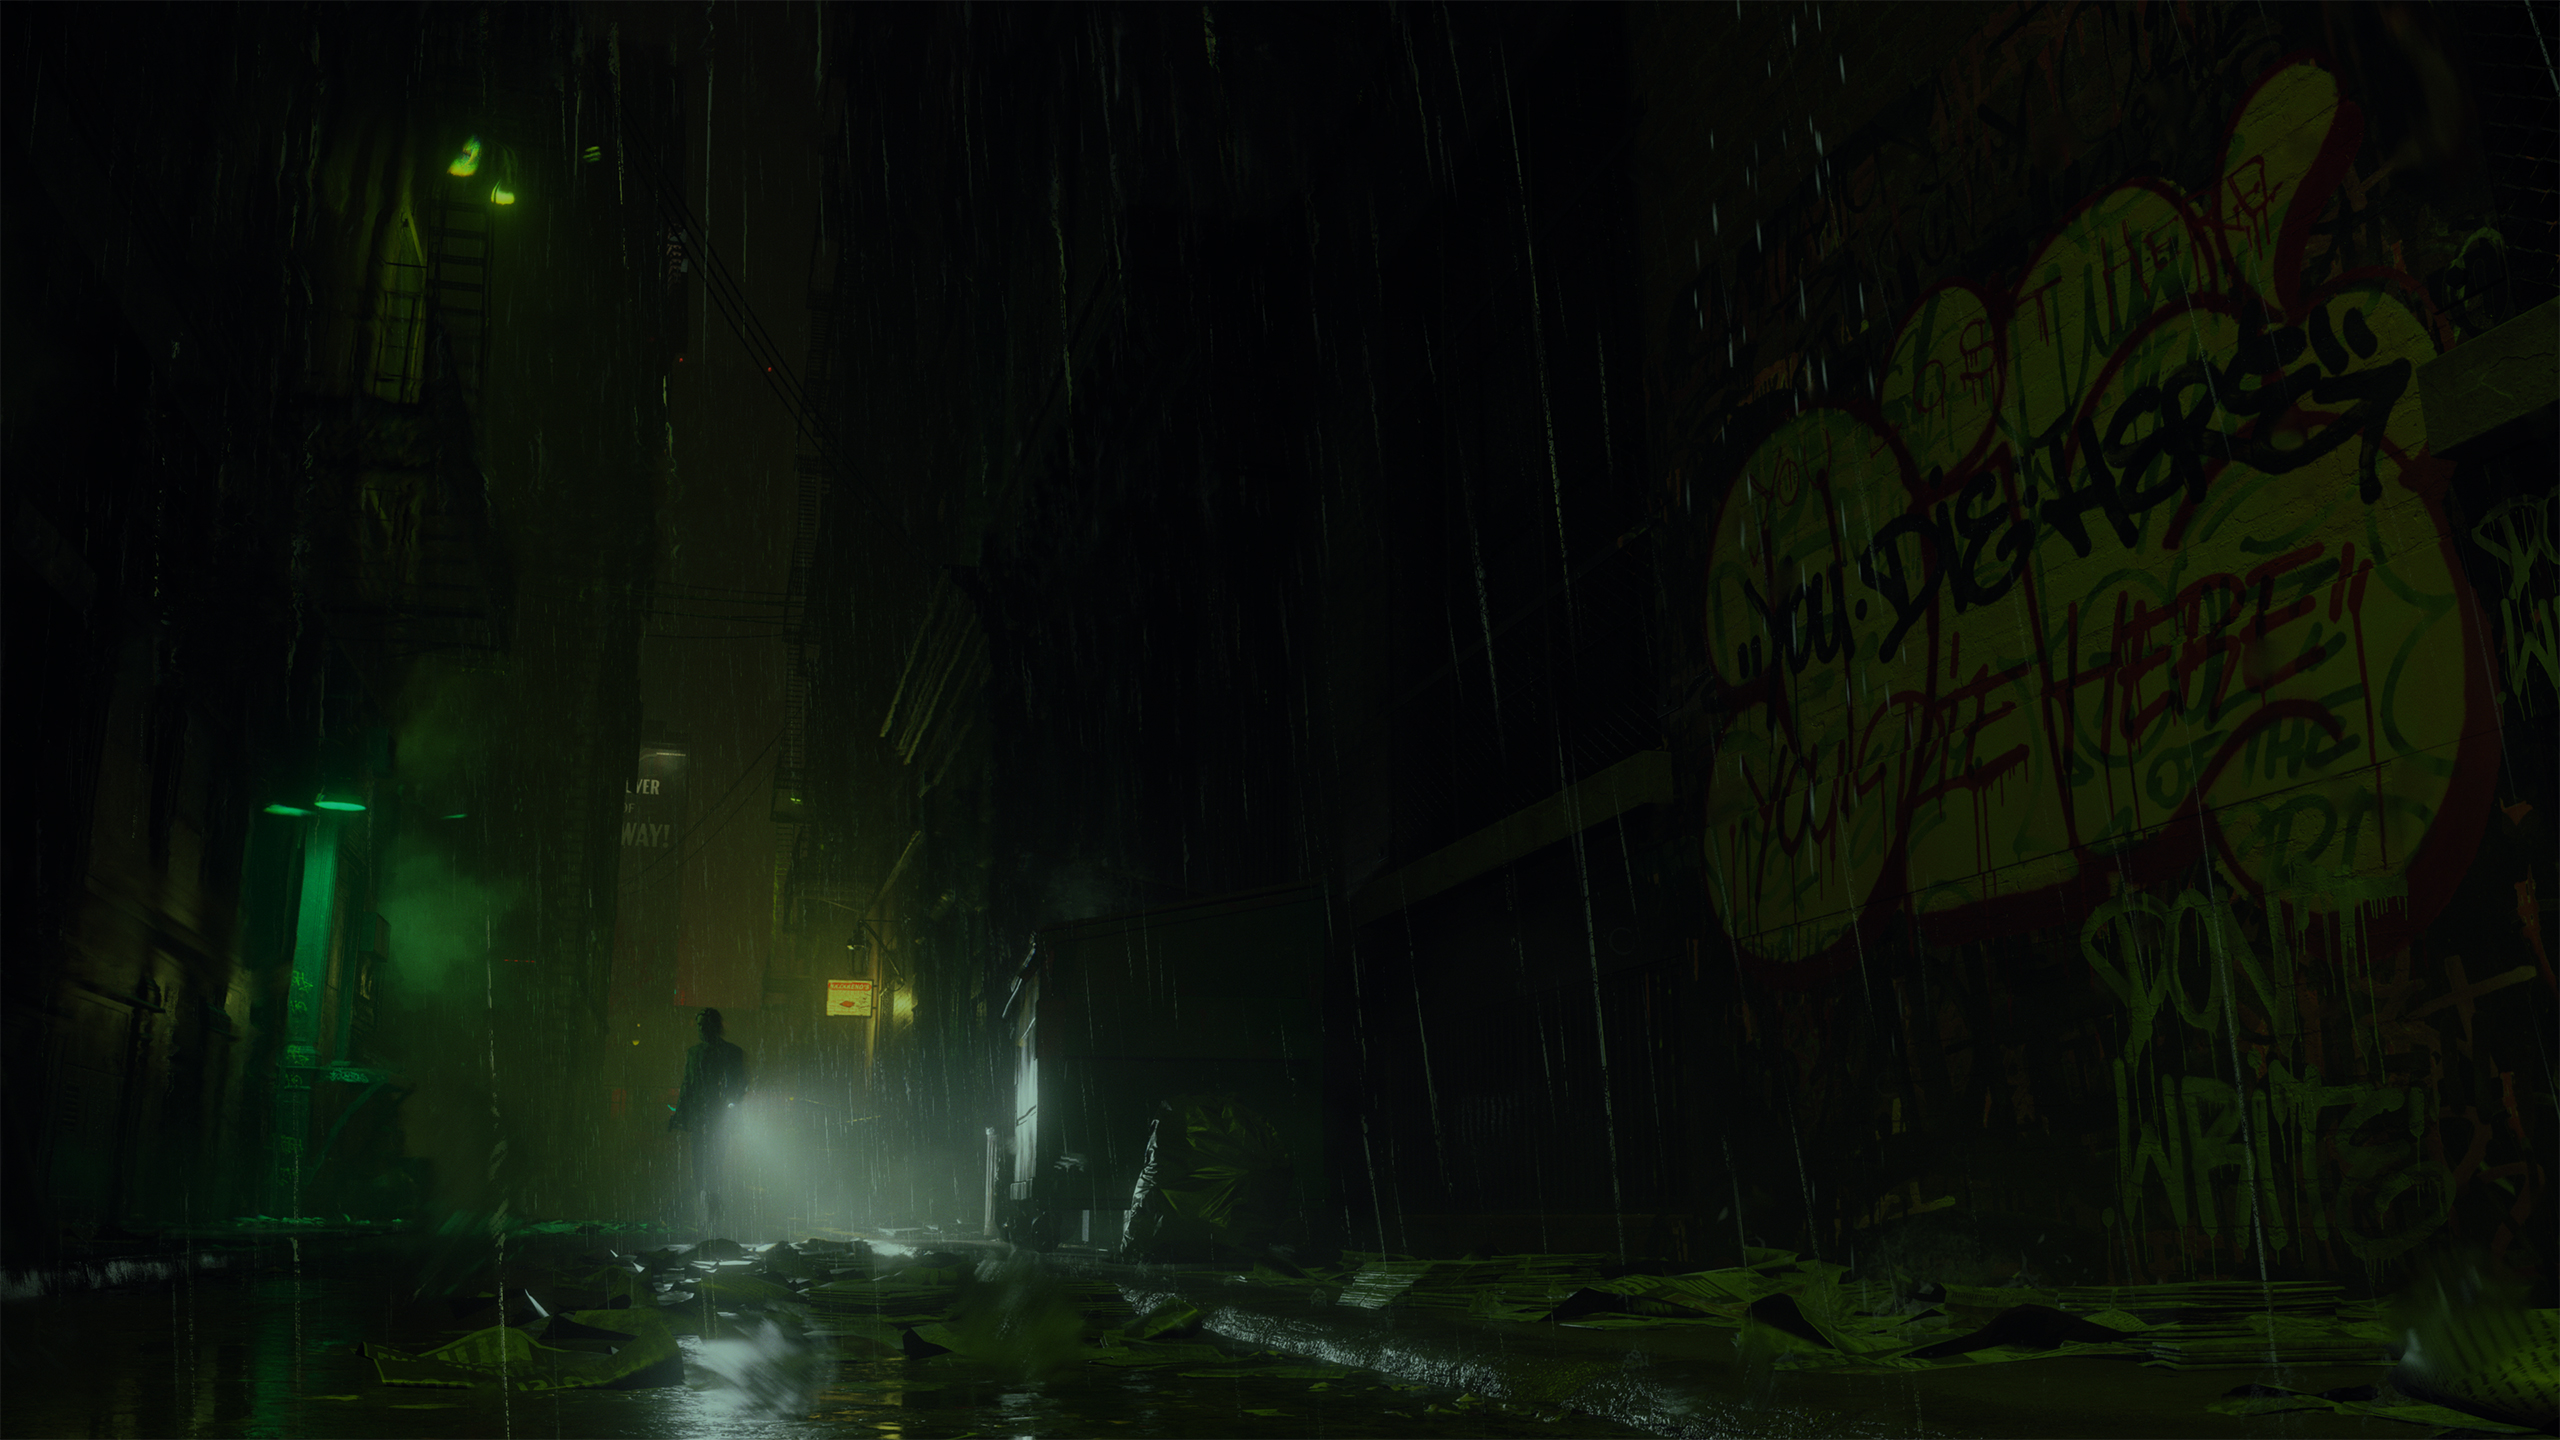 HD desktop wallpaper of Alan Wake 2 featuring a dark, rainy street scene with mysterious figure and graffiti.